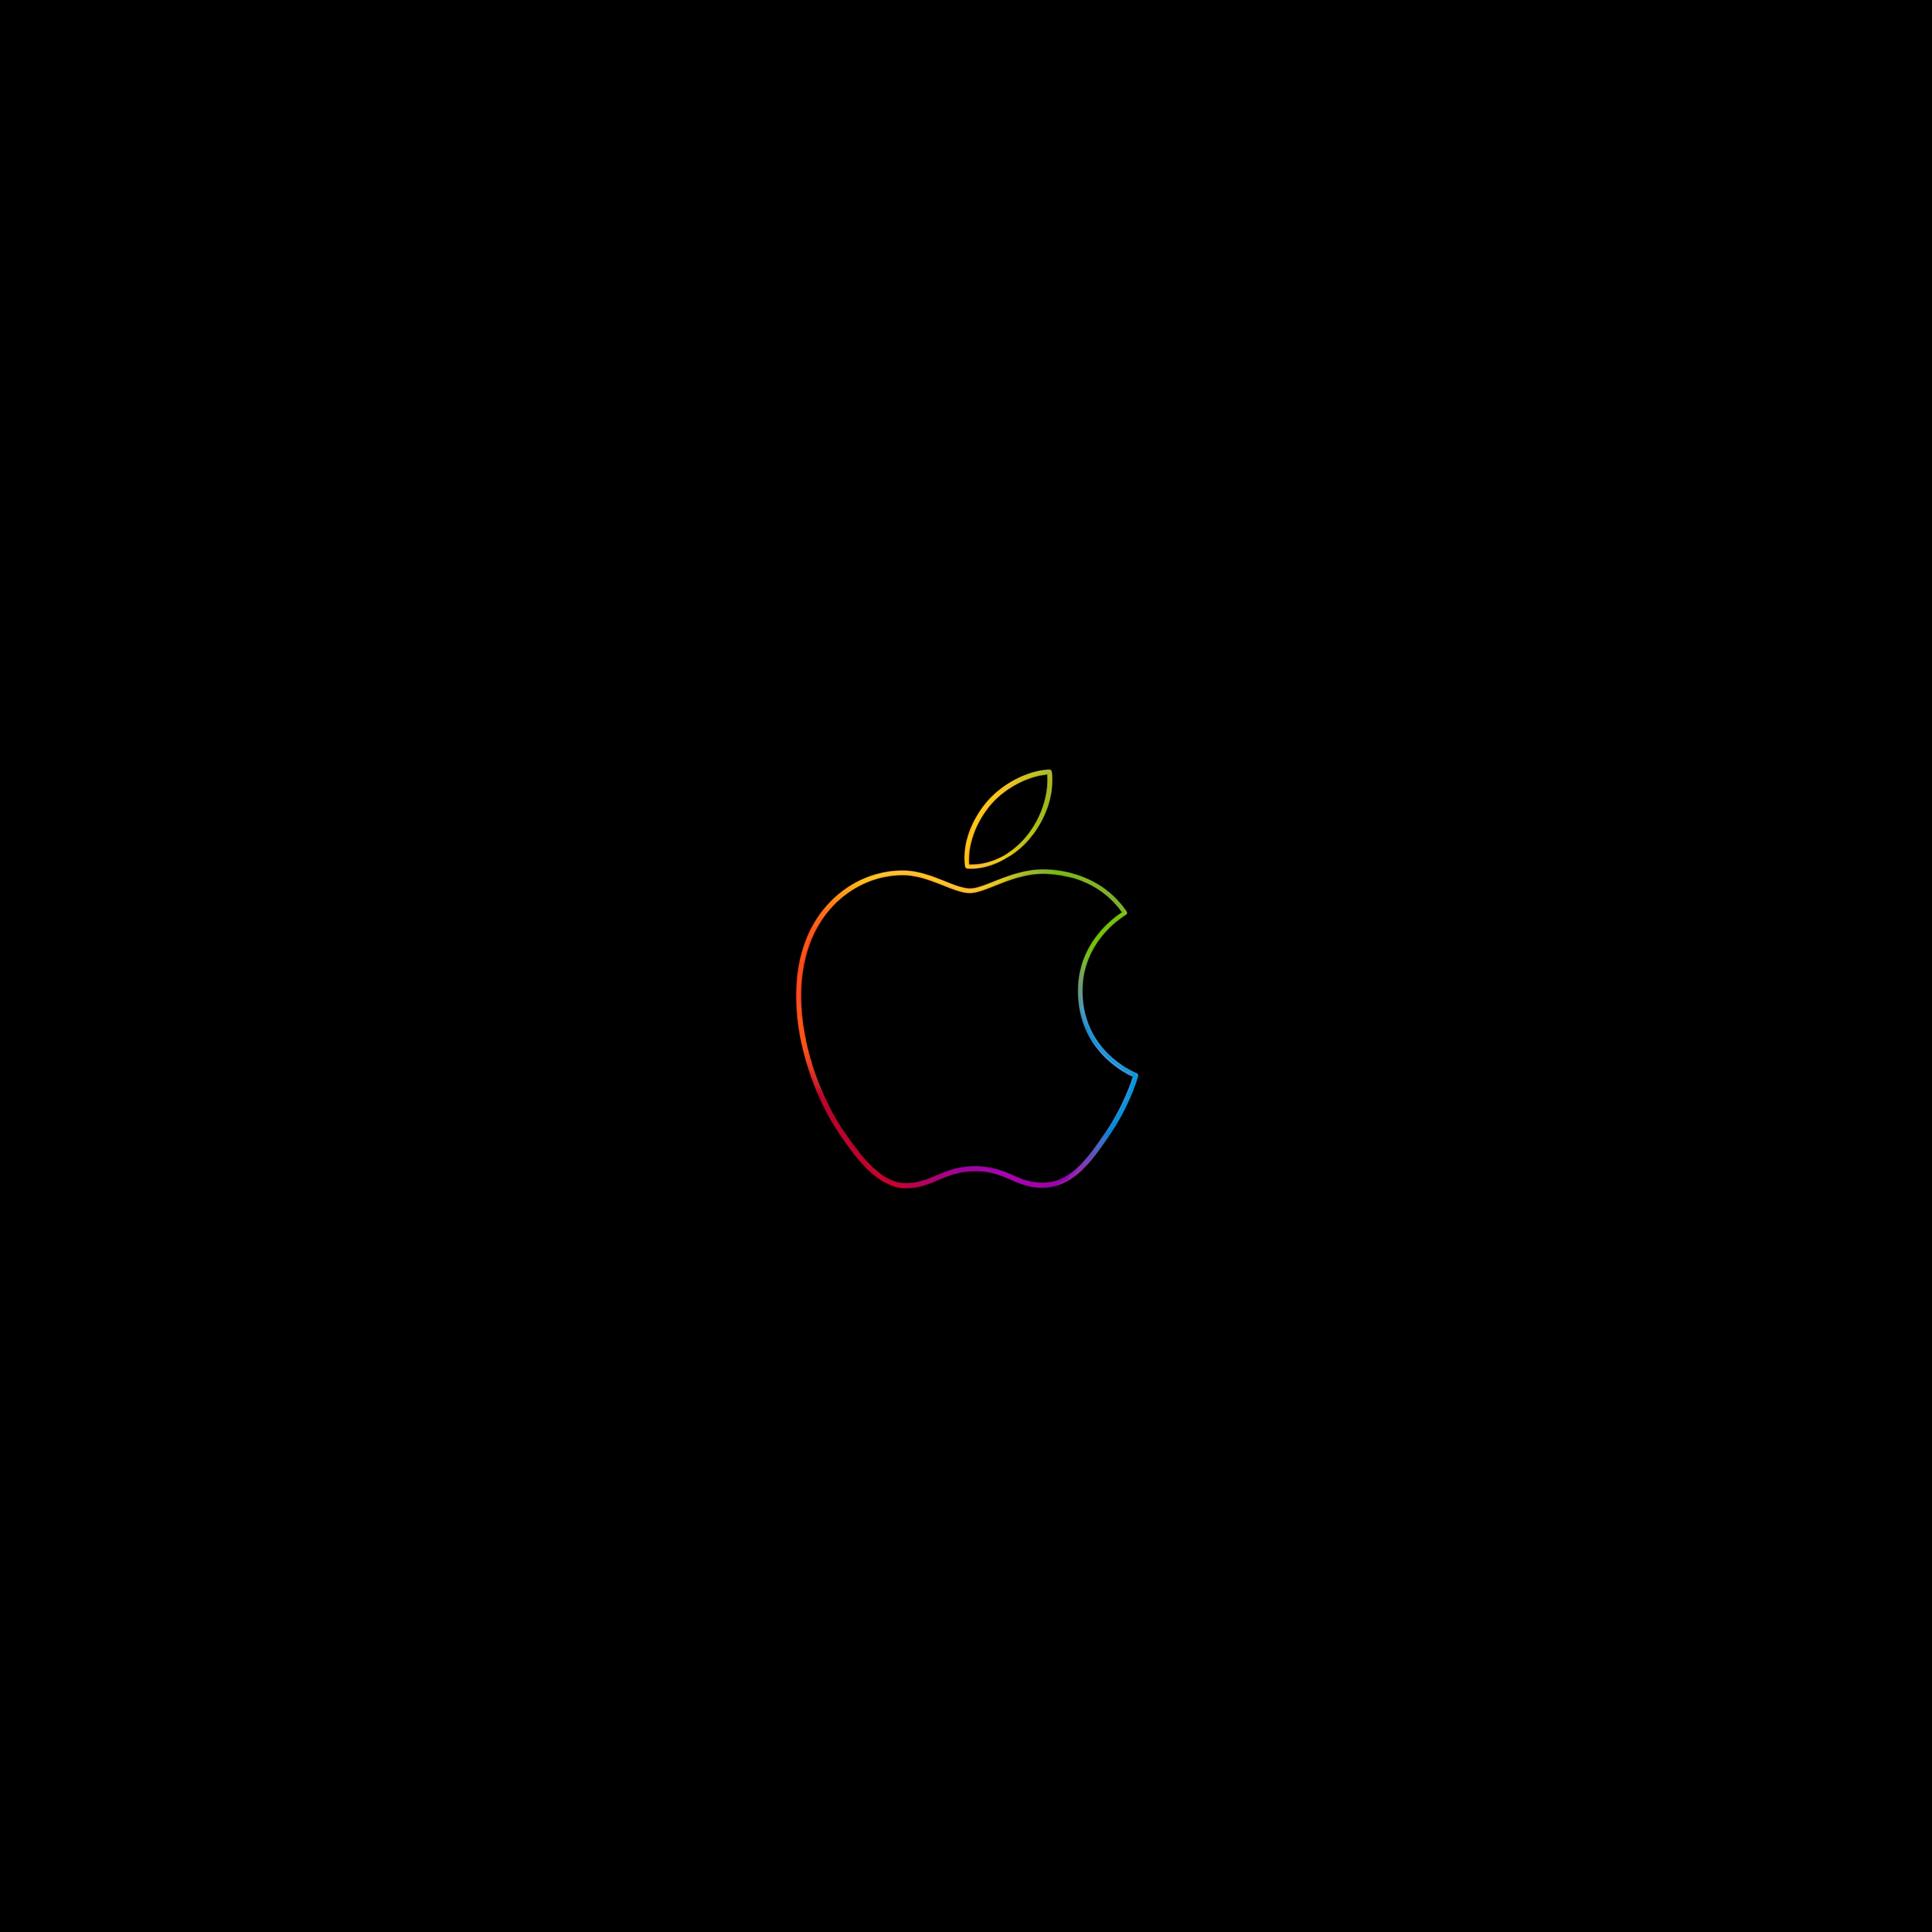 HD wallpaper, Black Background, Outline, Colorful, Amoled, Apple Logo, Simple